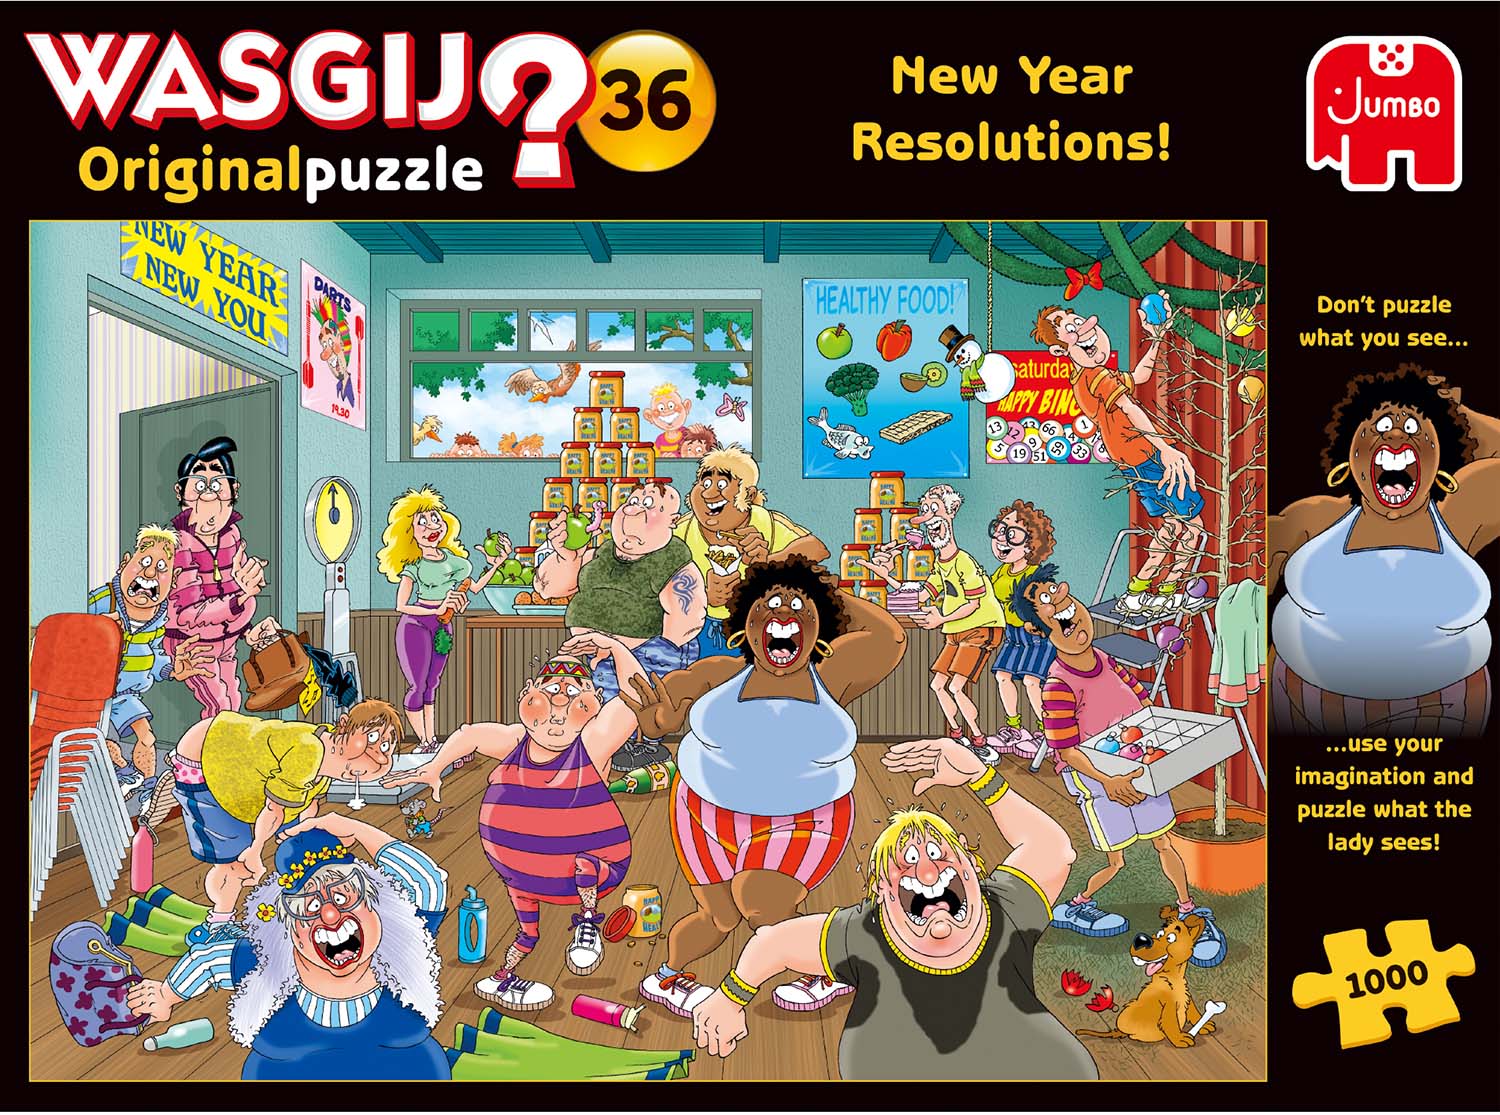 Wasgij Original 36: New Year Resolutions!